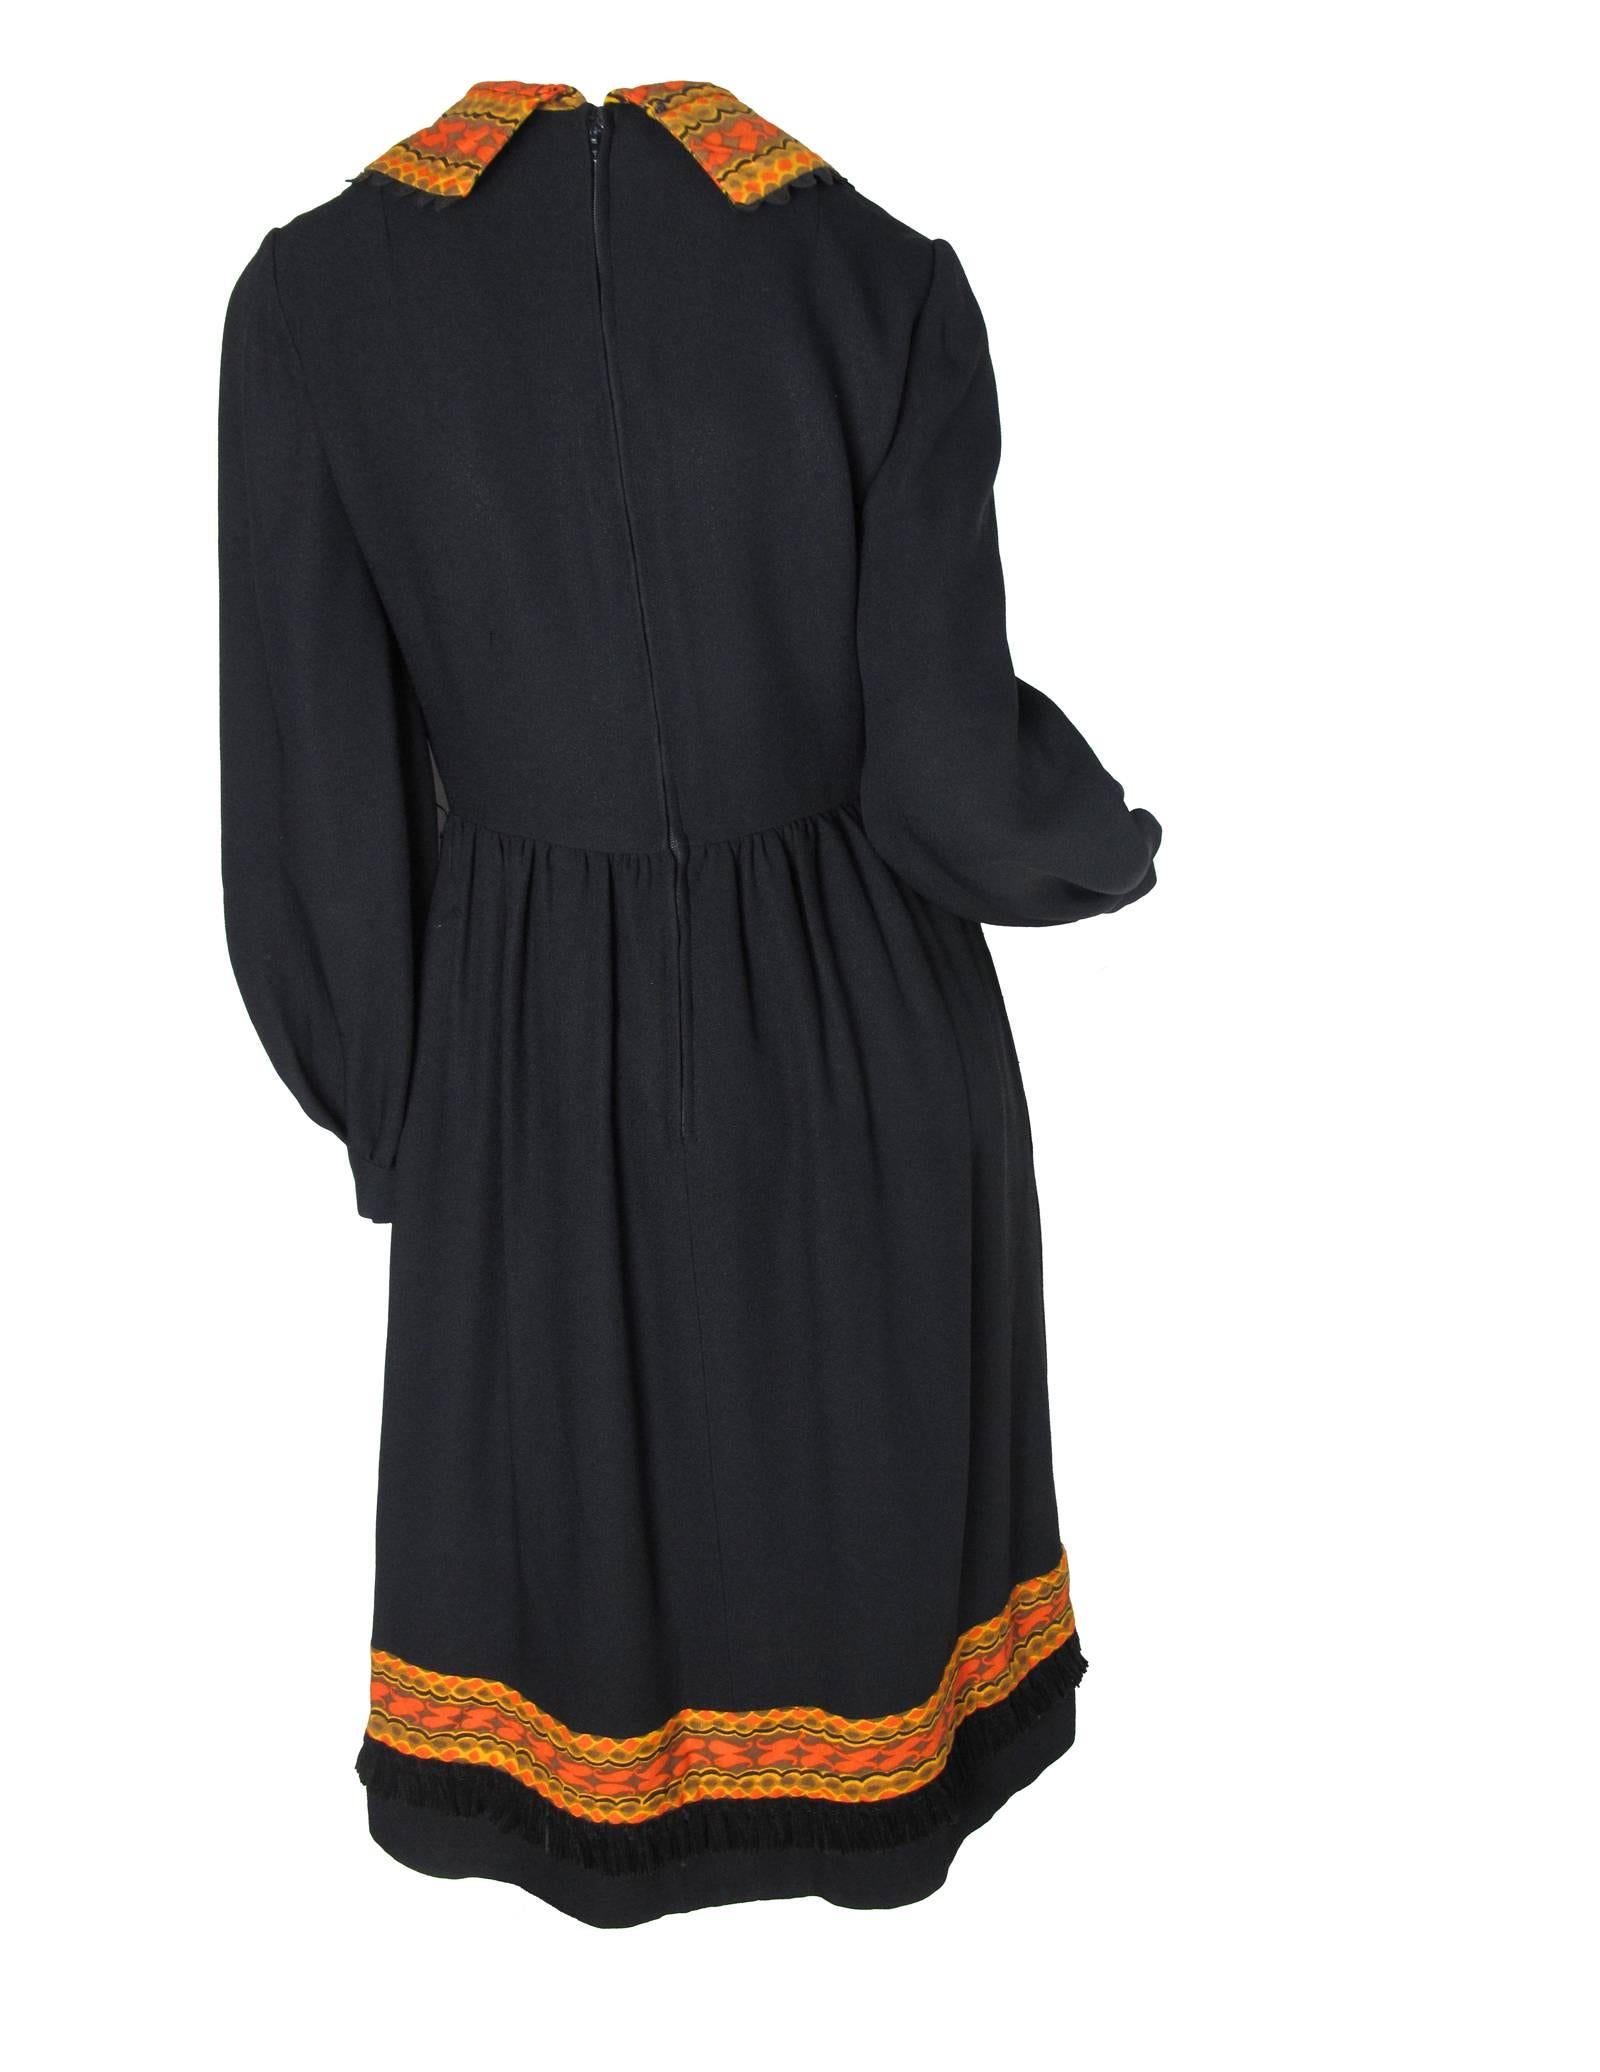 1960s Oscar de la Renta black crepe dress with orange collar and velvet tassle trim. Side pockets. Condition: Very good. Size Large
34